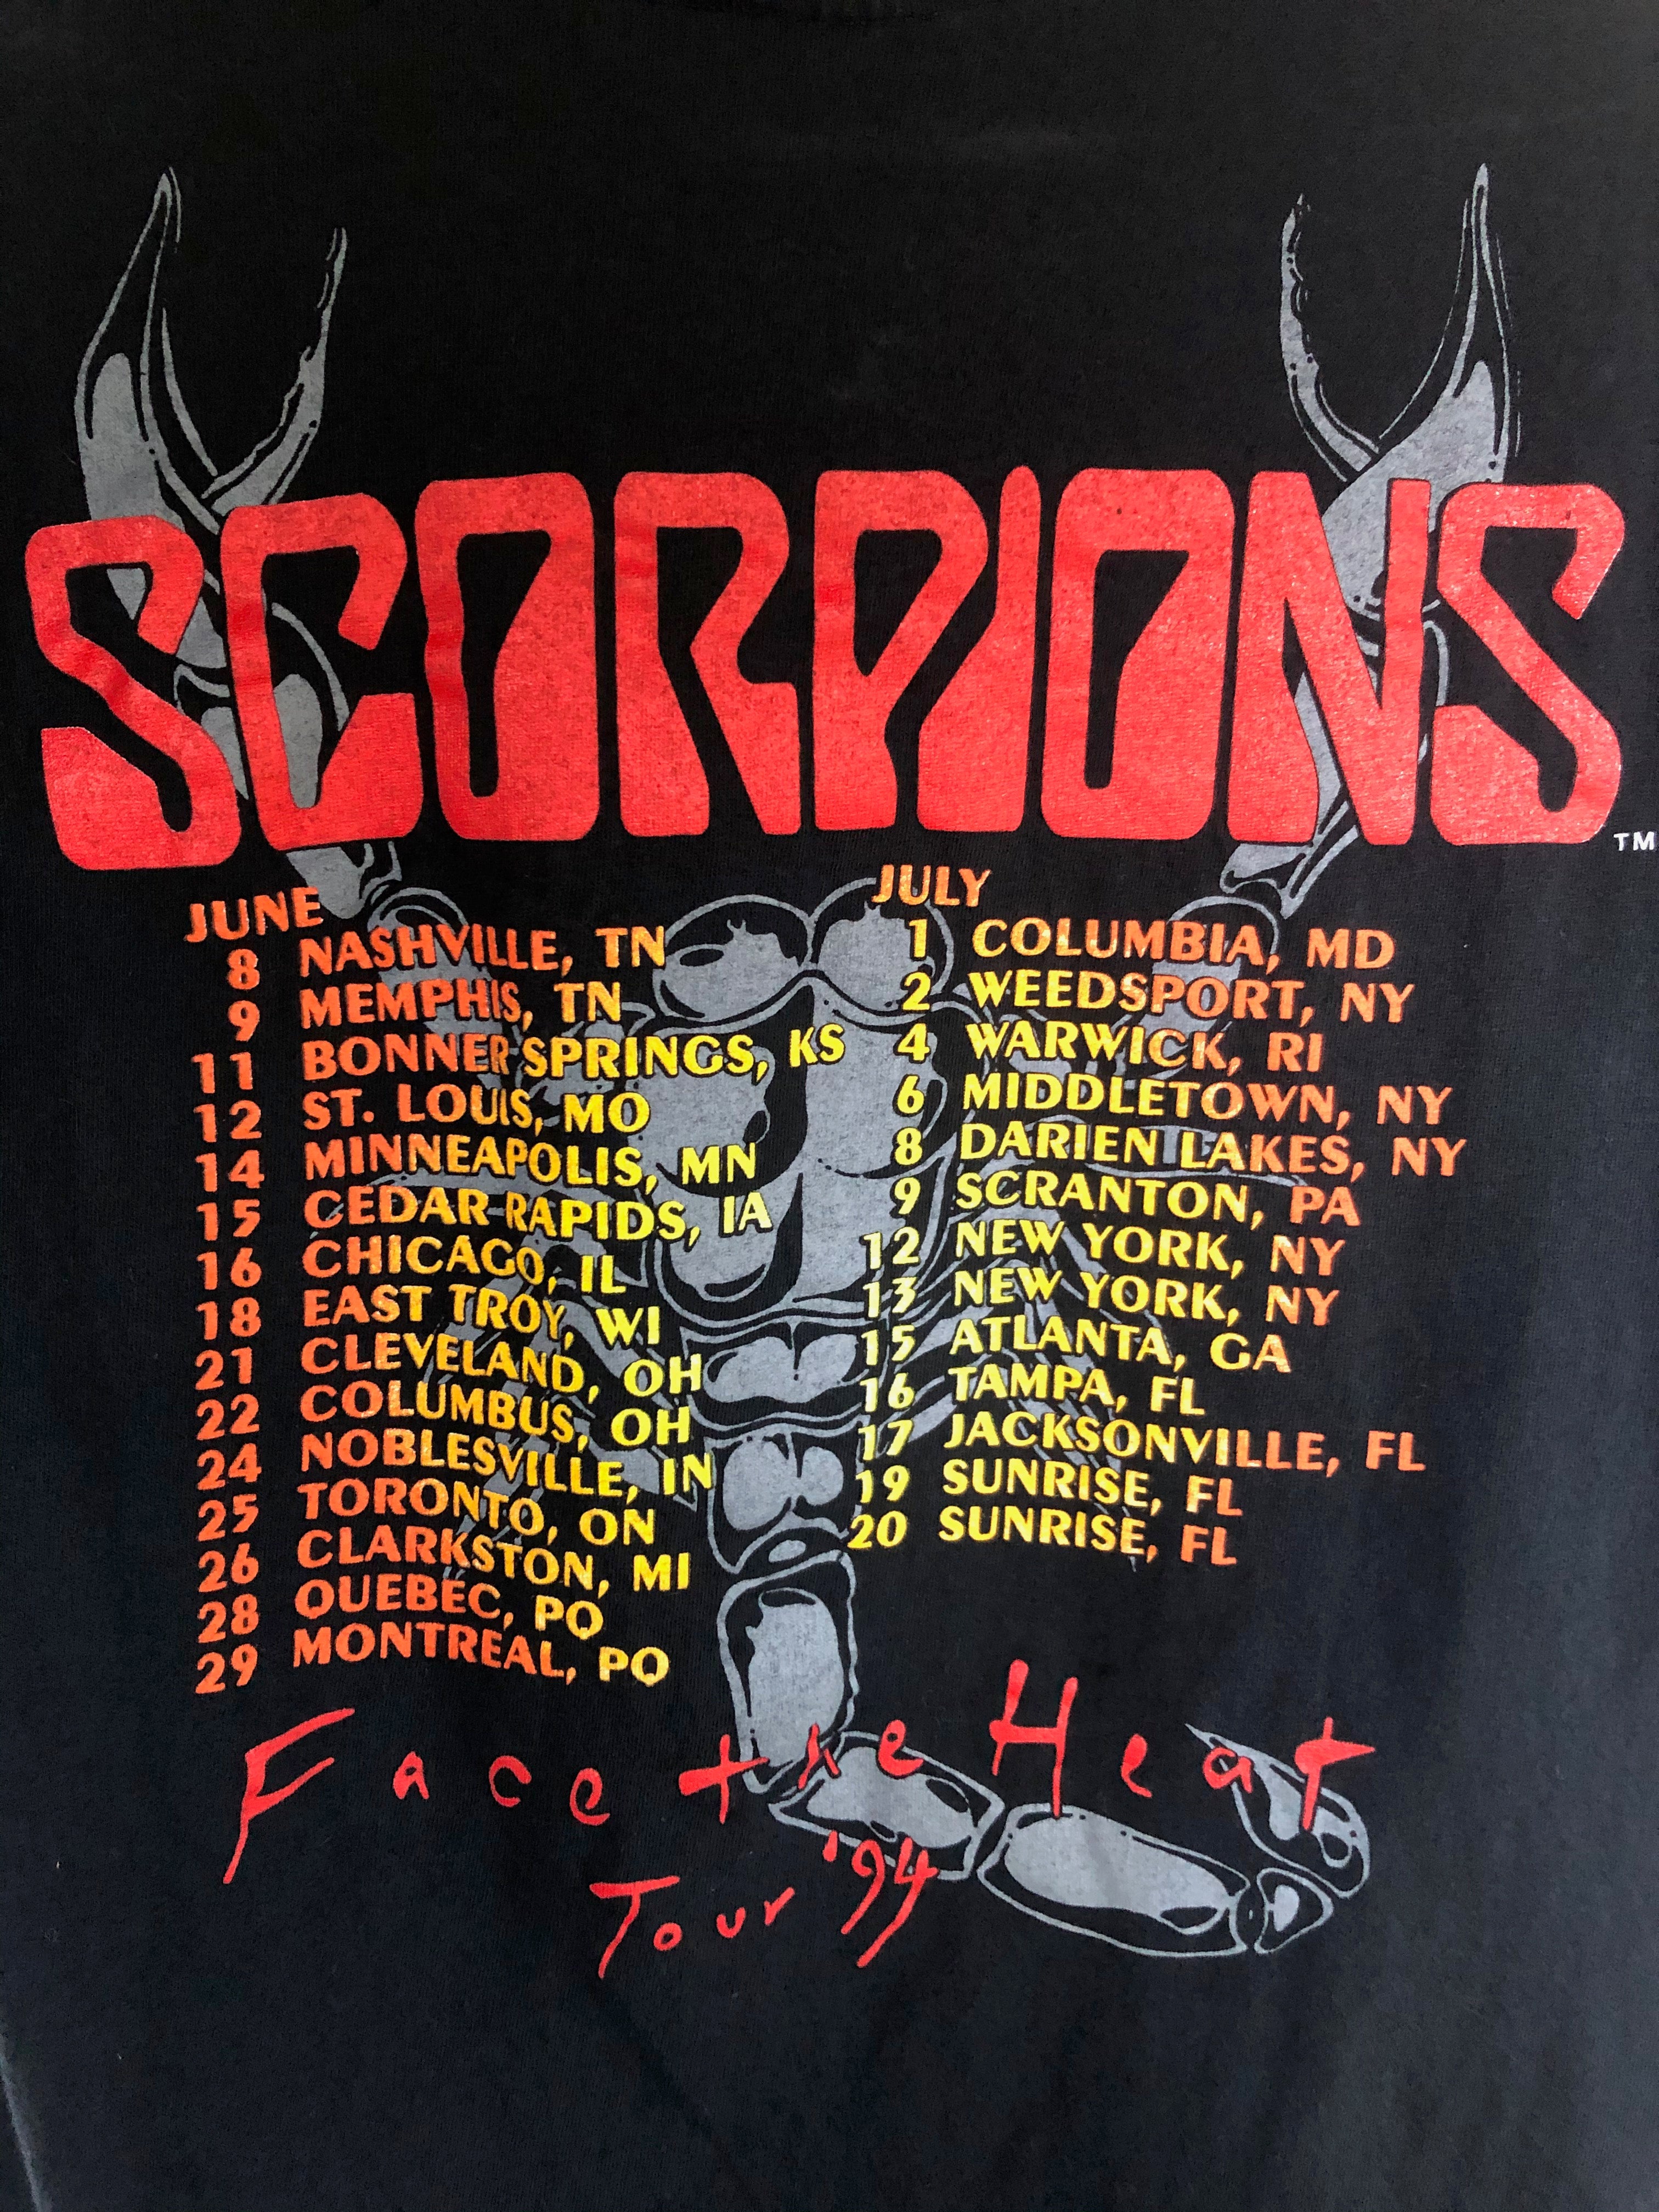 Authentic Scorpions Tour Tee- Face The Heat Tour ‘94